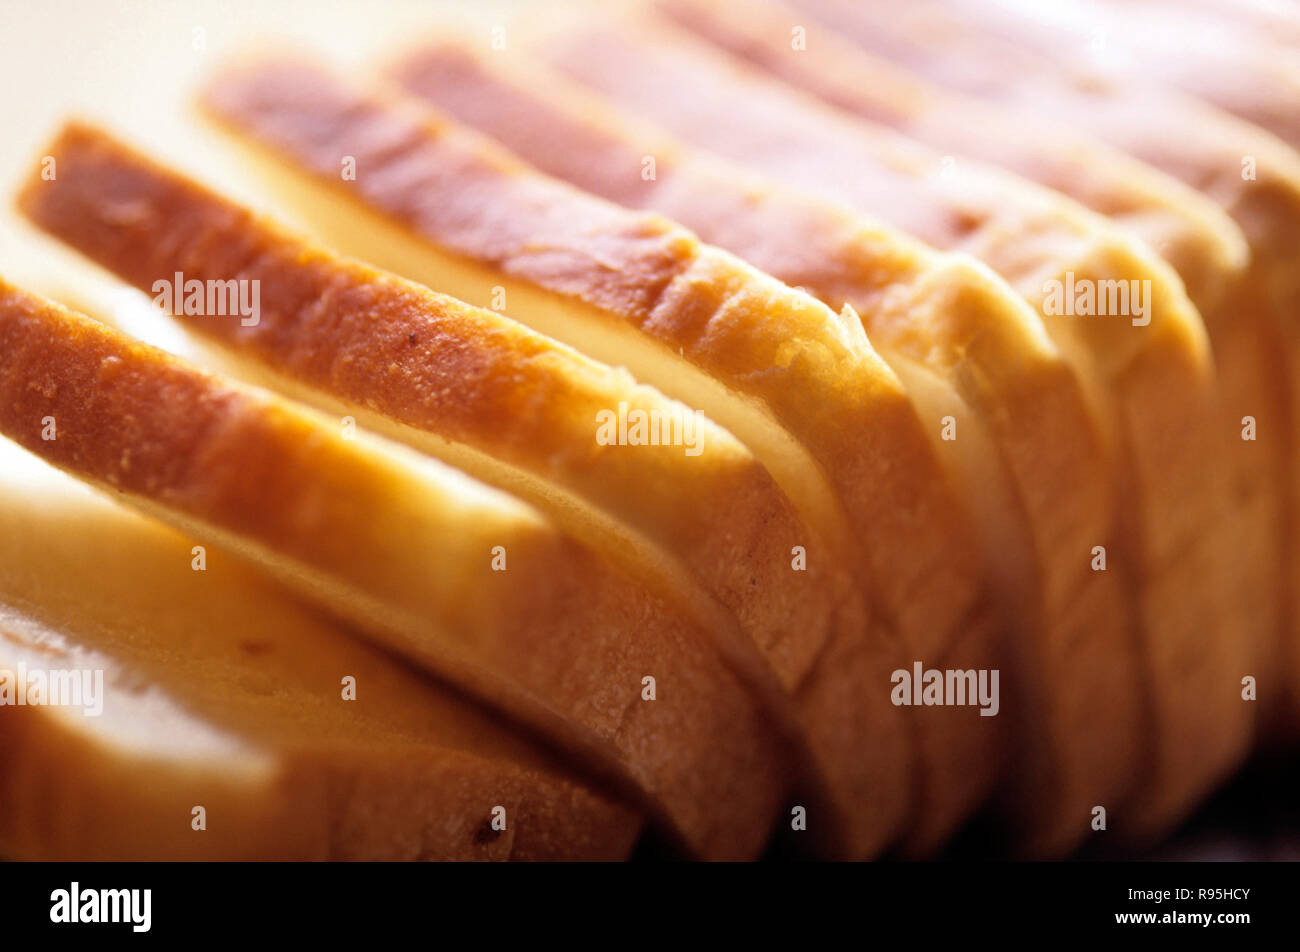 Sliced bread, Bread slices Stock Photo